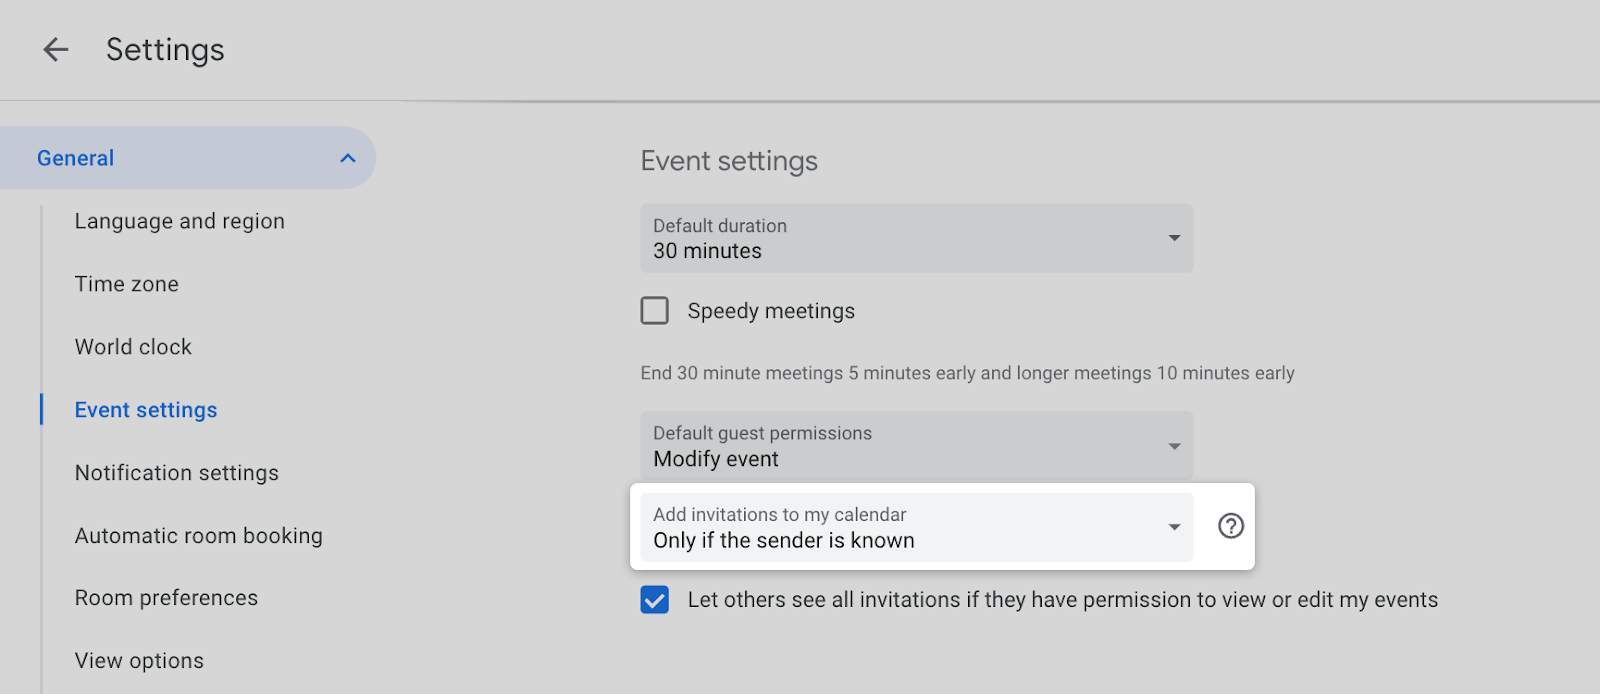 Google Calendar Settings, "Add invitations to my calendar" option highlighted